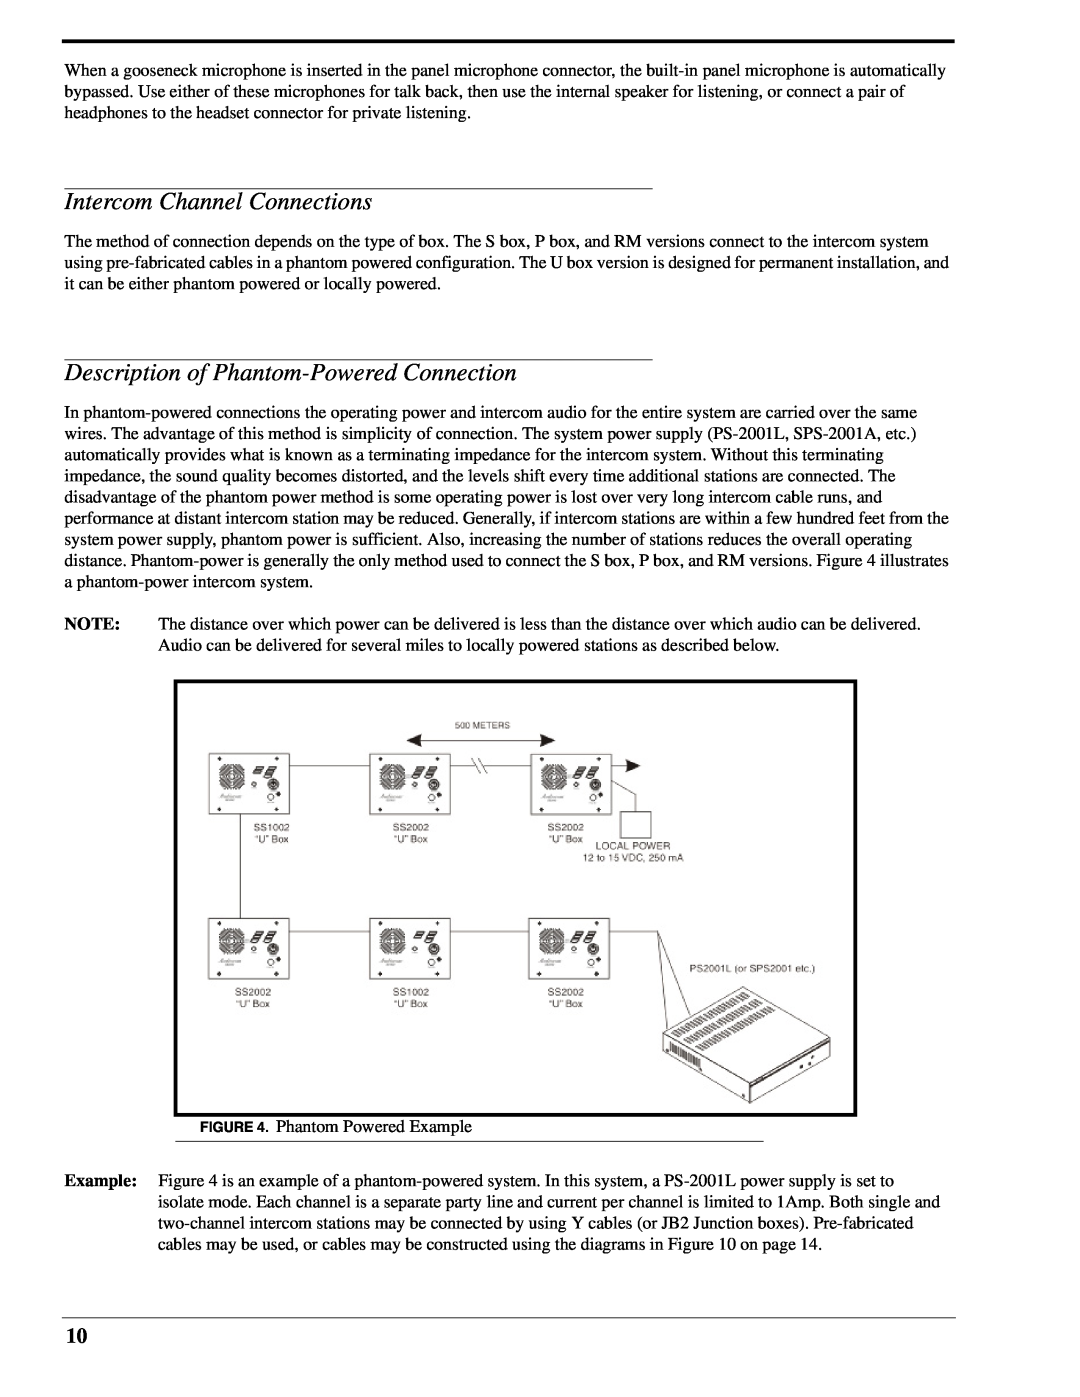 Telex SS-1002 technical manual Intercom Channel Connections, Description of Phantom-PoweredConnection 